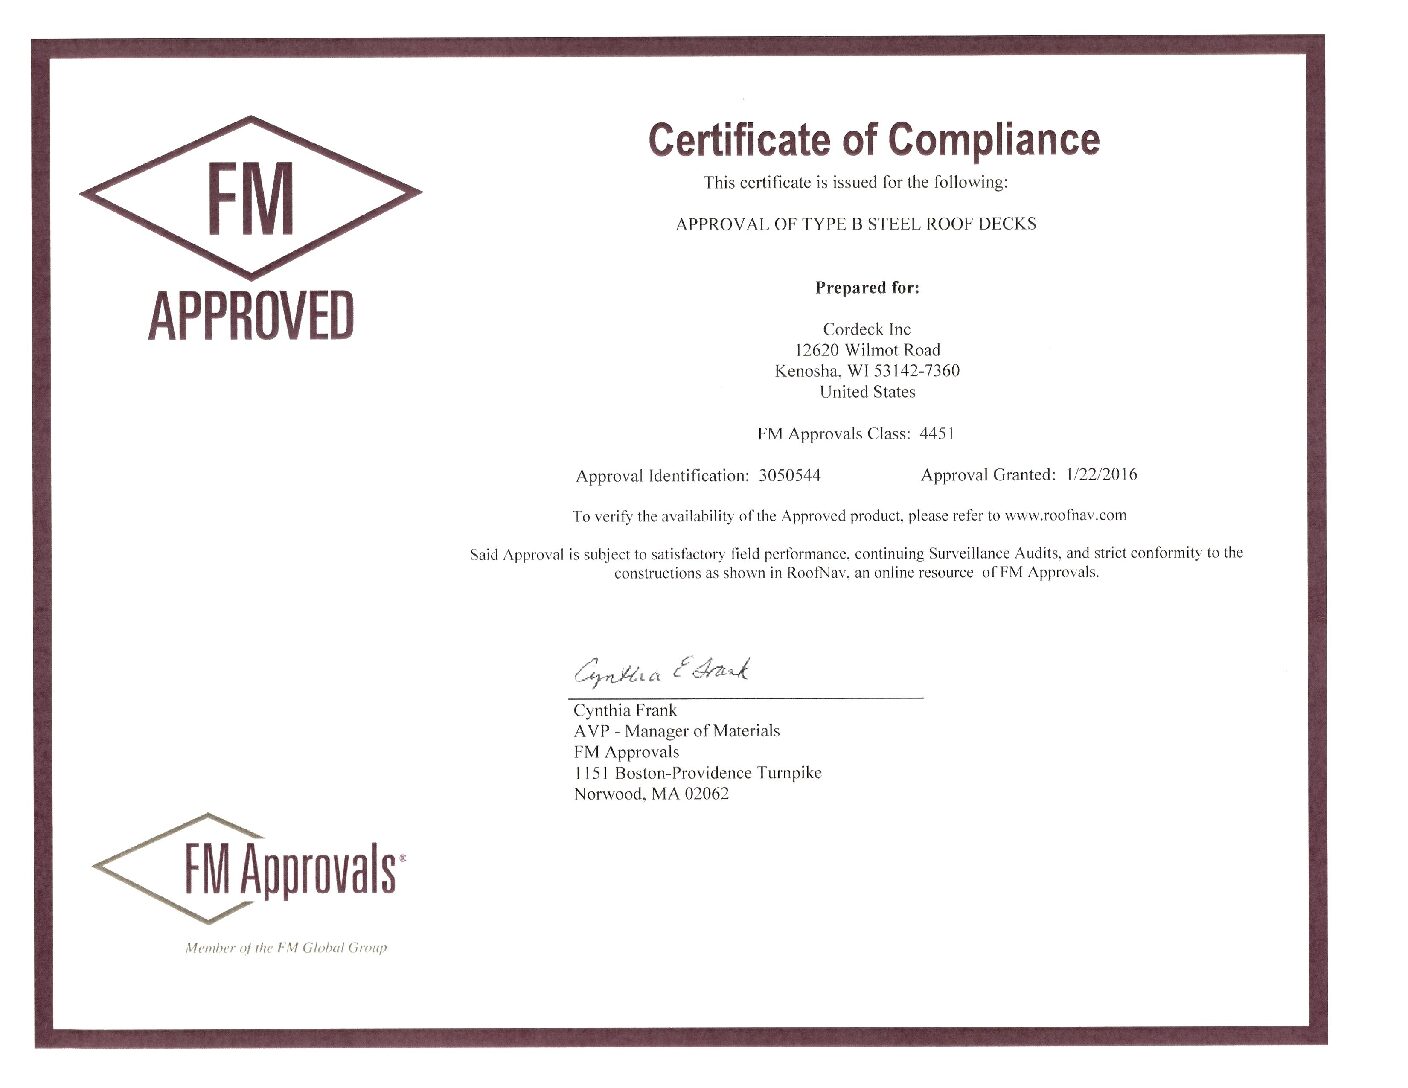 Cordeck's FM Certificate Of Compliance